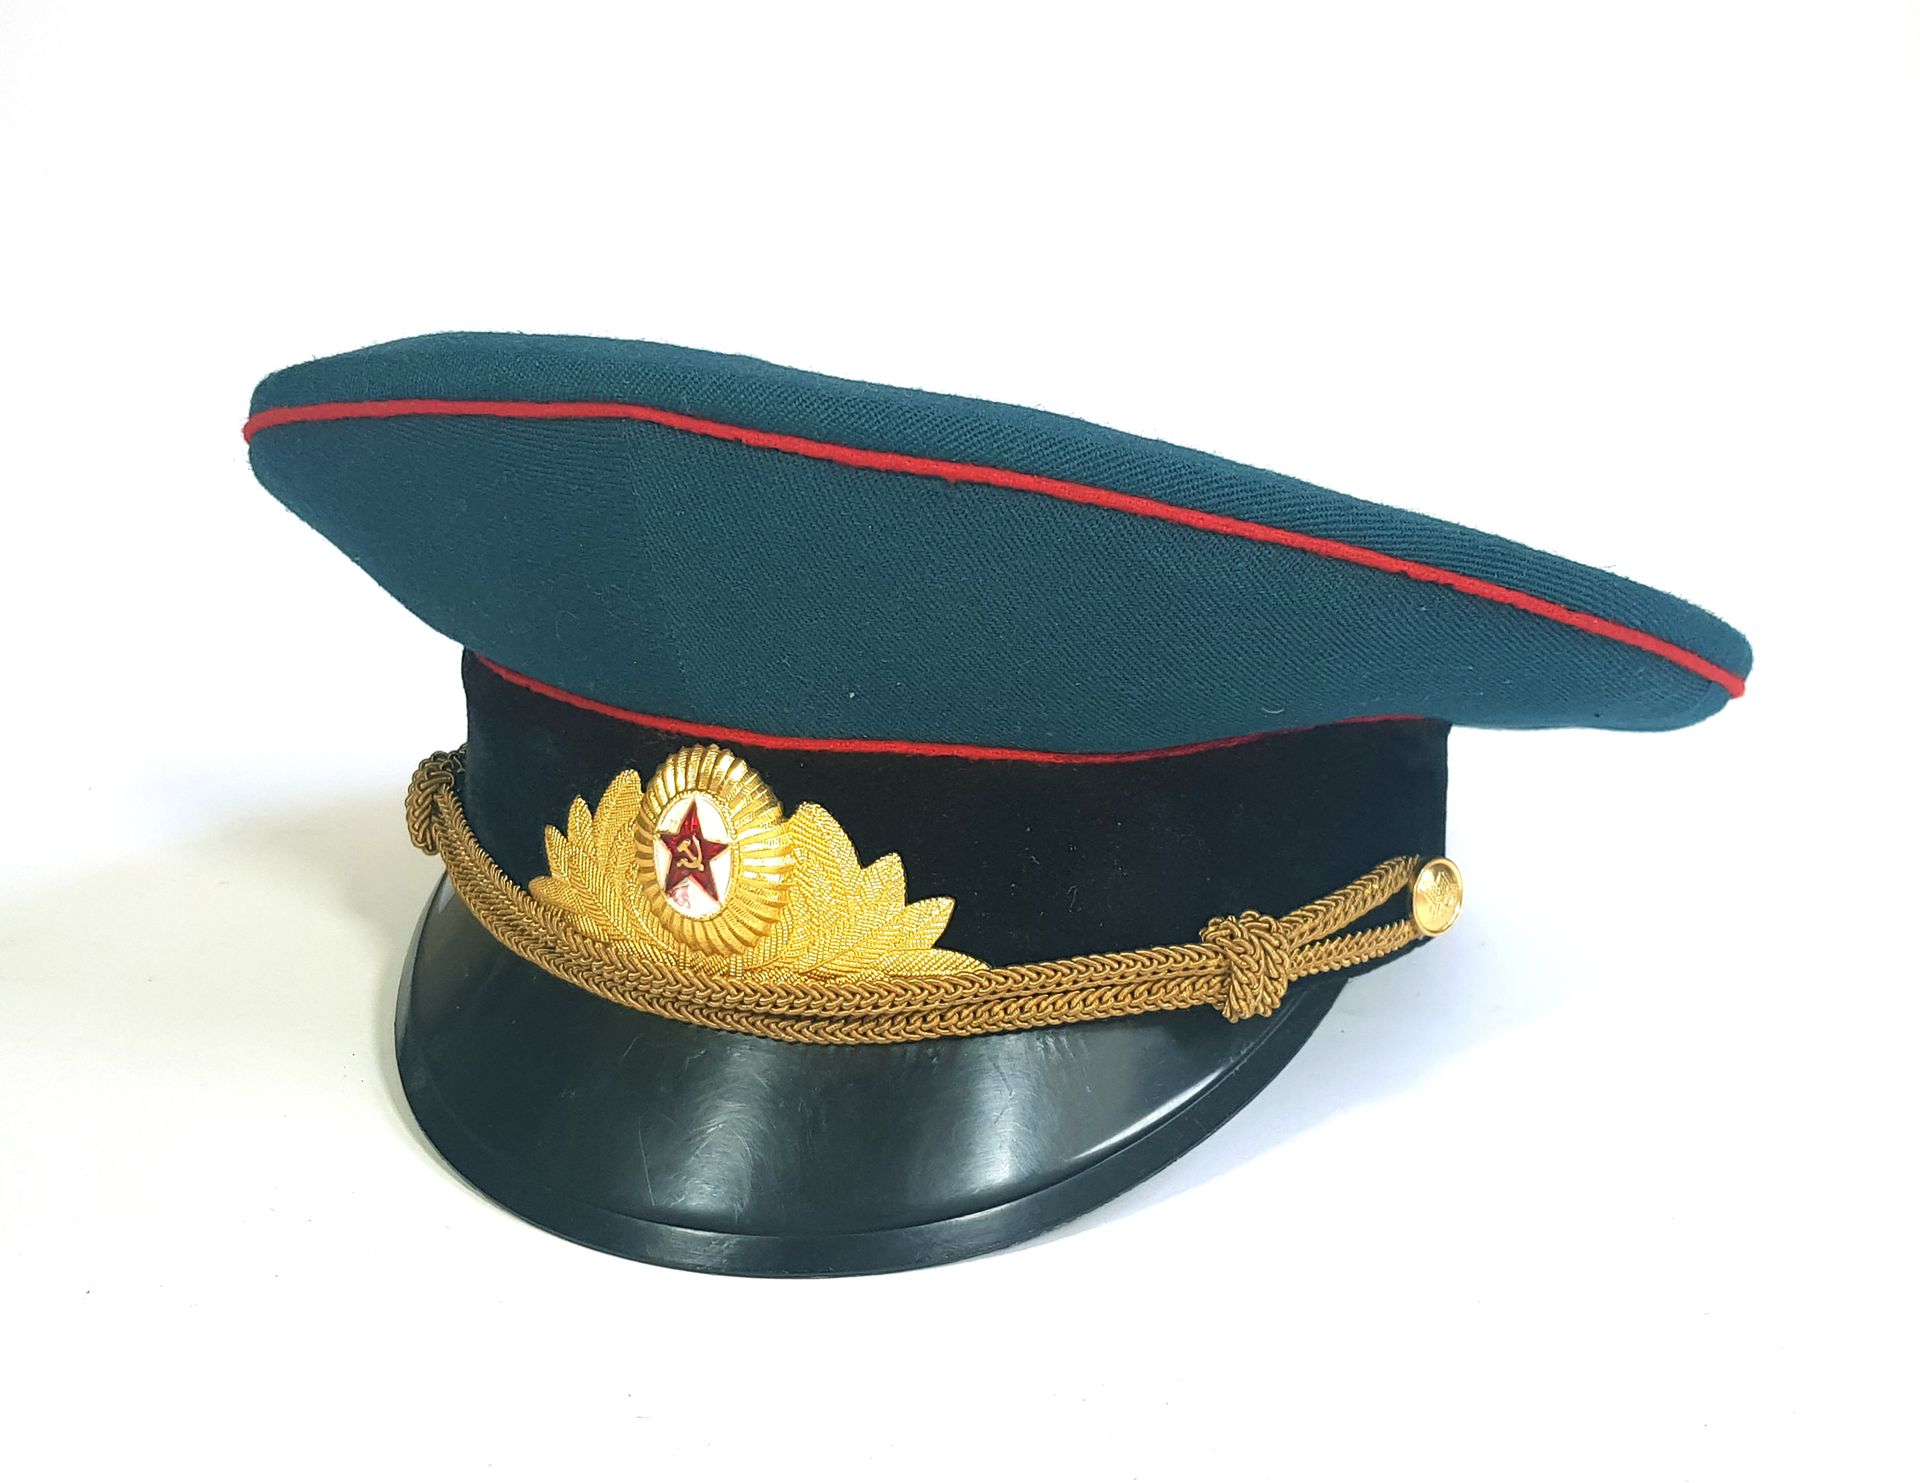 Null фуражка советскойармии

苏联军官的礼帽，帽内有俄文标签，日期为1987年

直径28厘米

状况良好